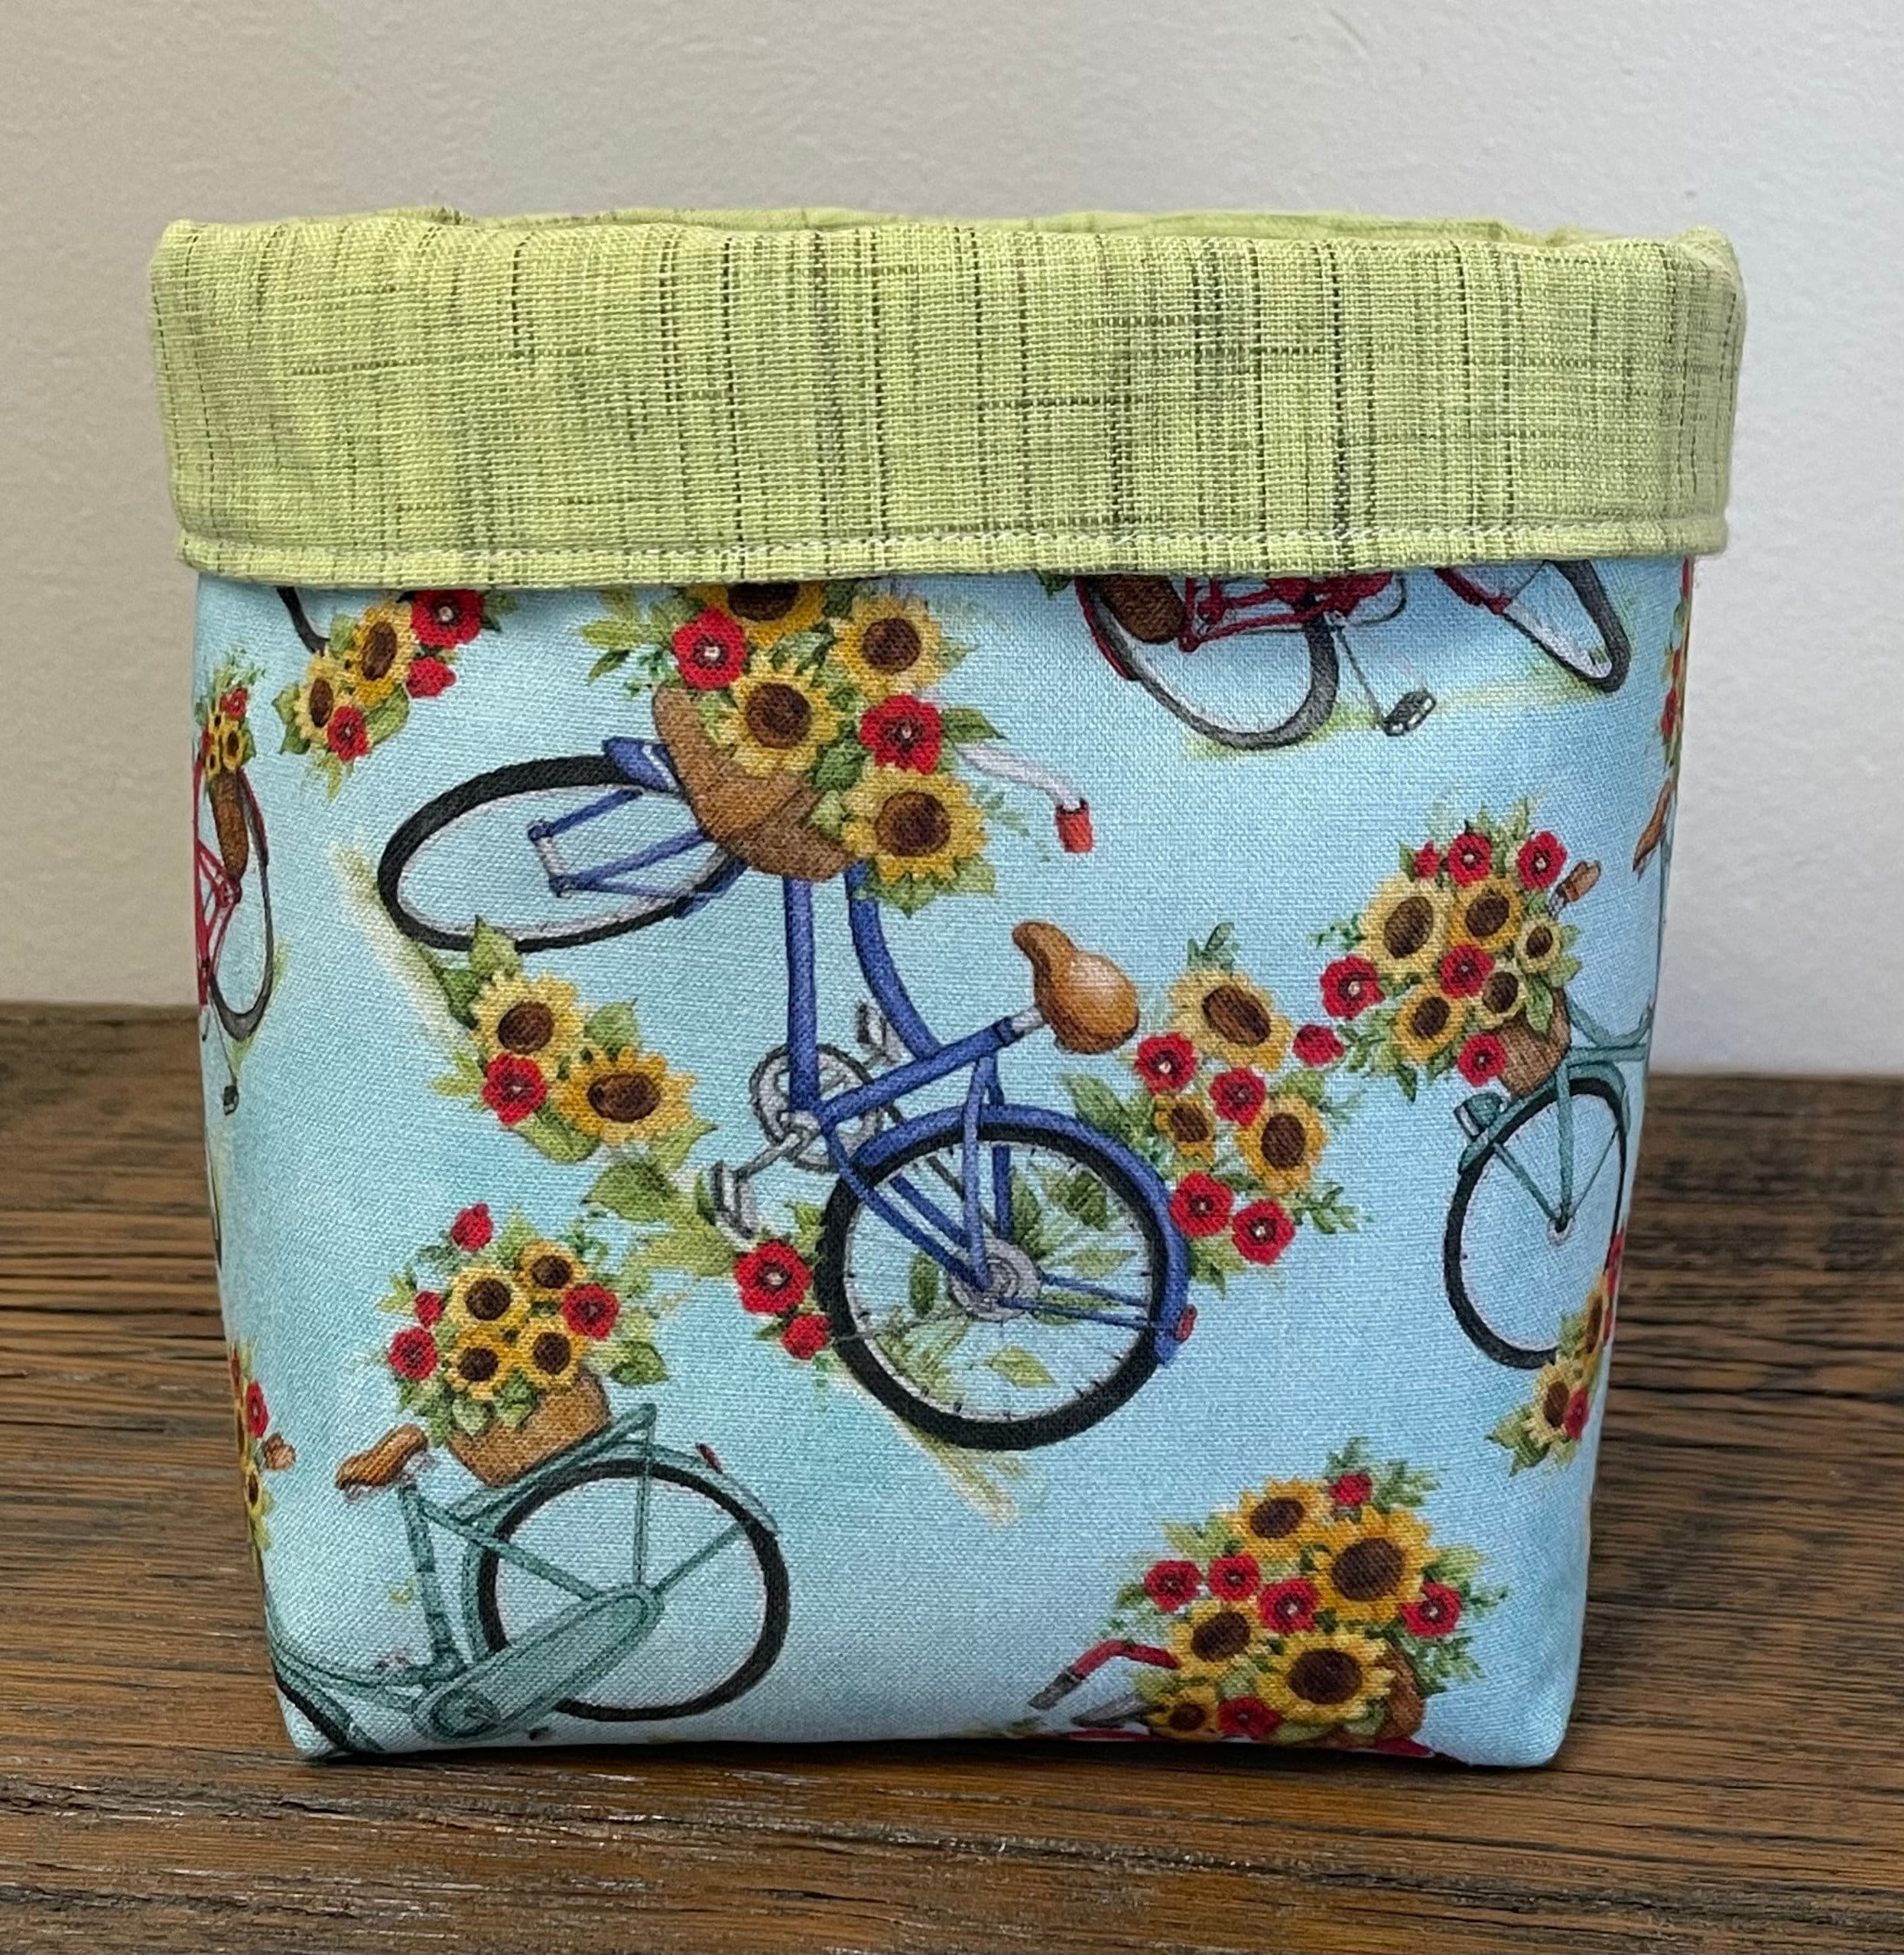 Fabric Basket, Spring Decor, Bicycle Themed, Fabric Organizer